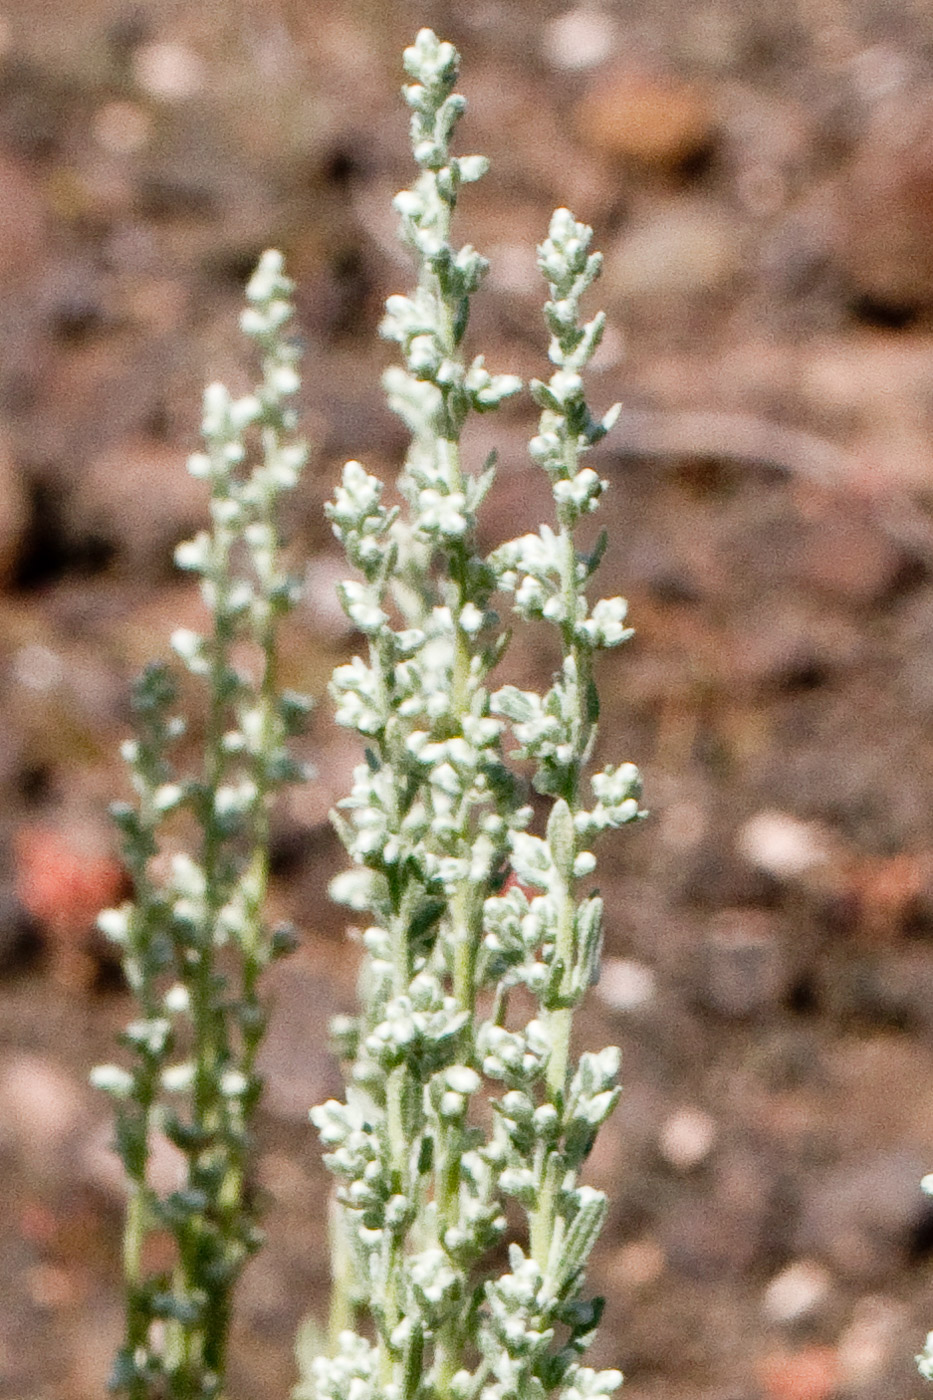 Tiny white flowers along stems